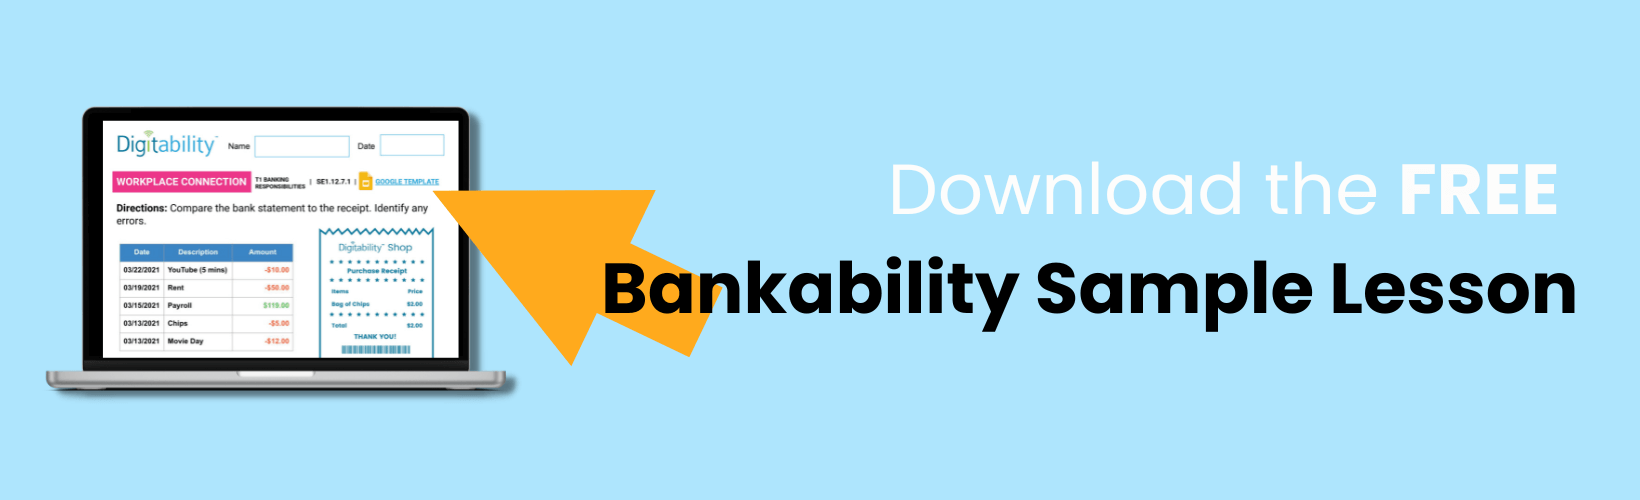 Bankability Sample Lesson Button